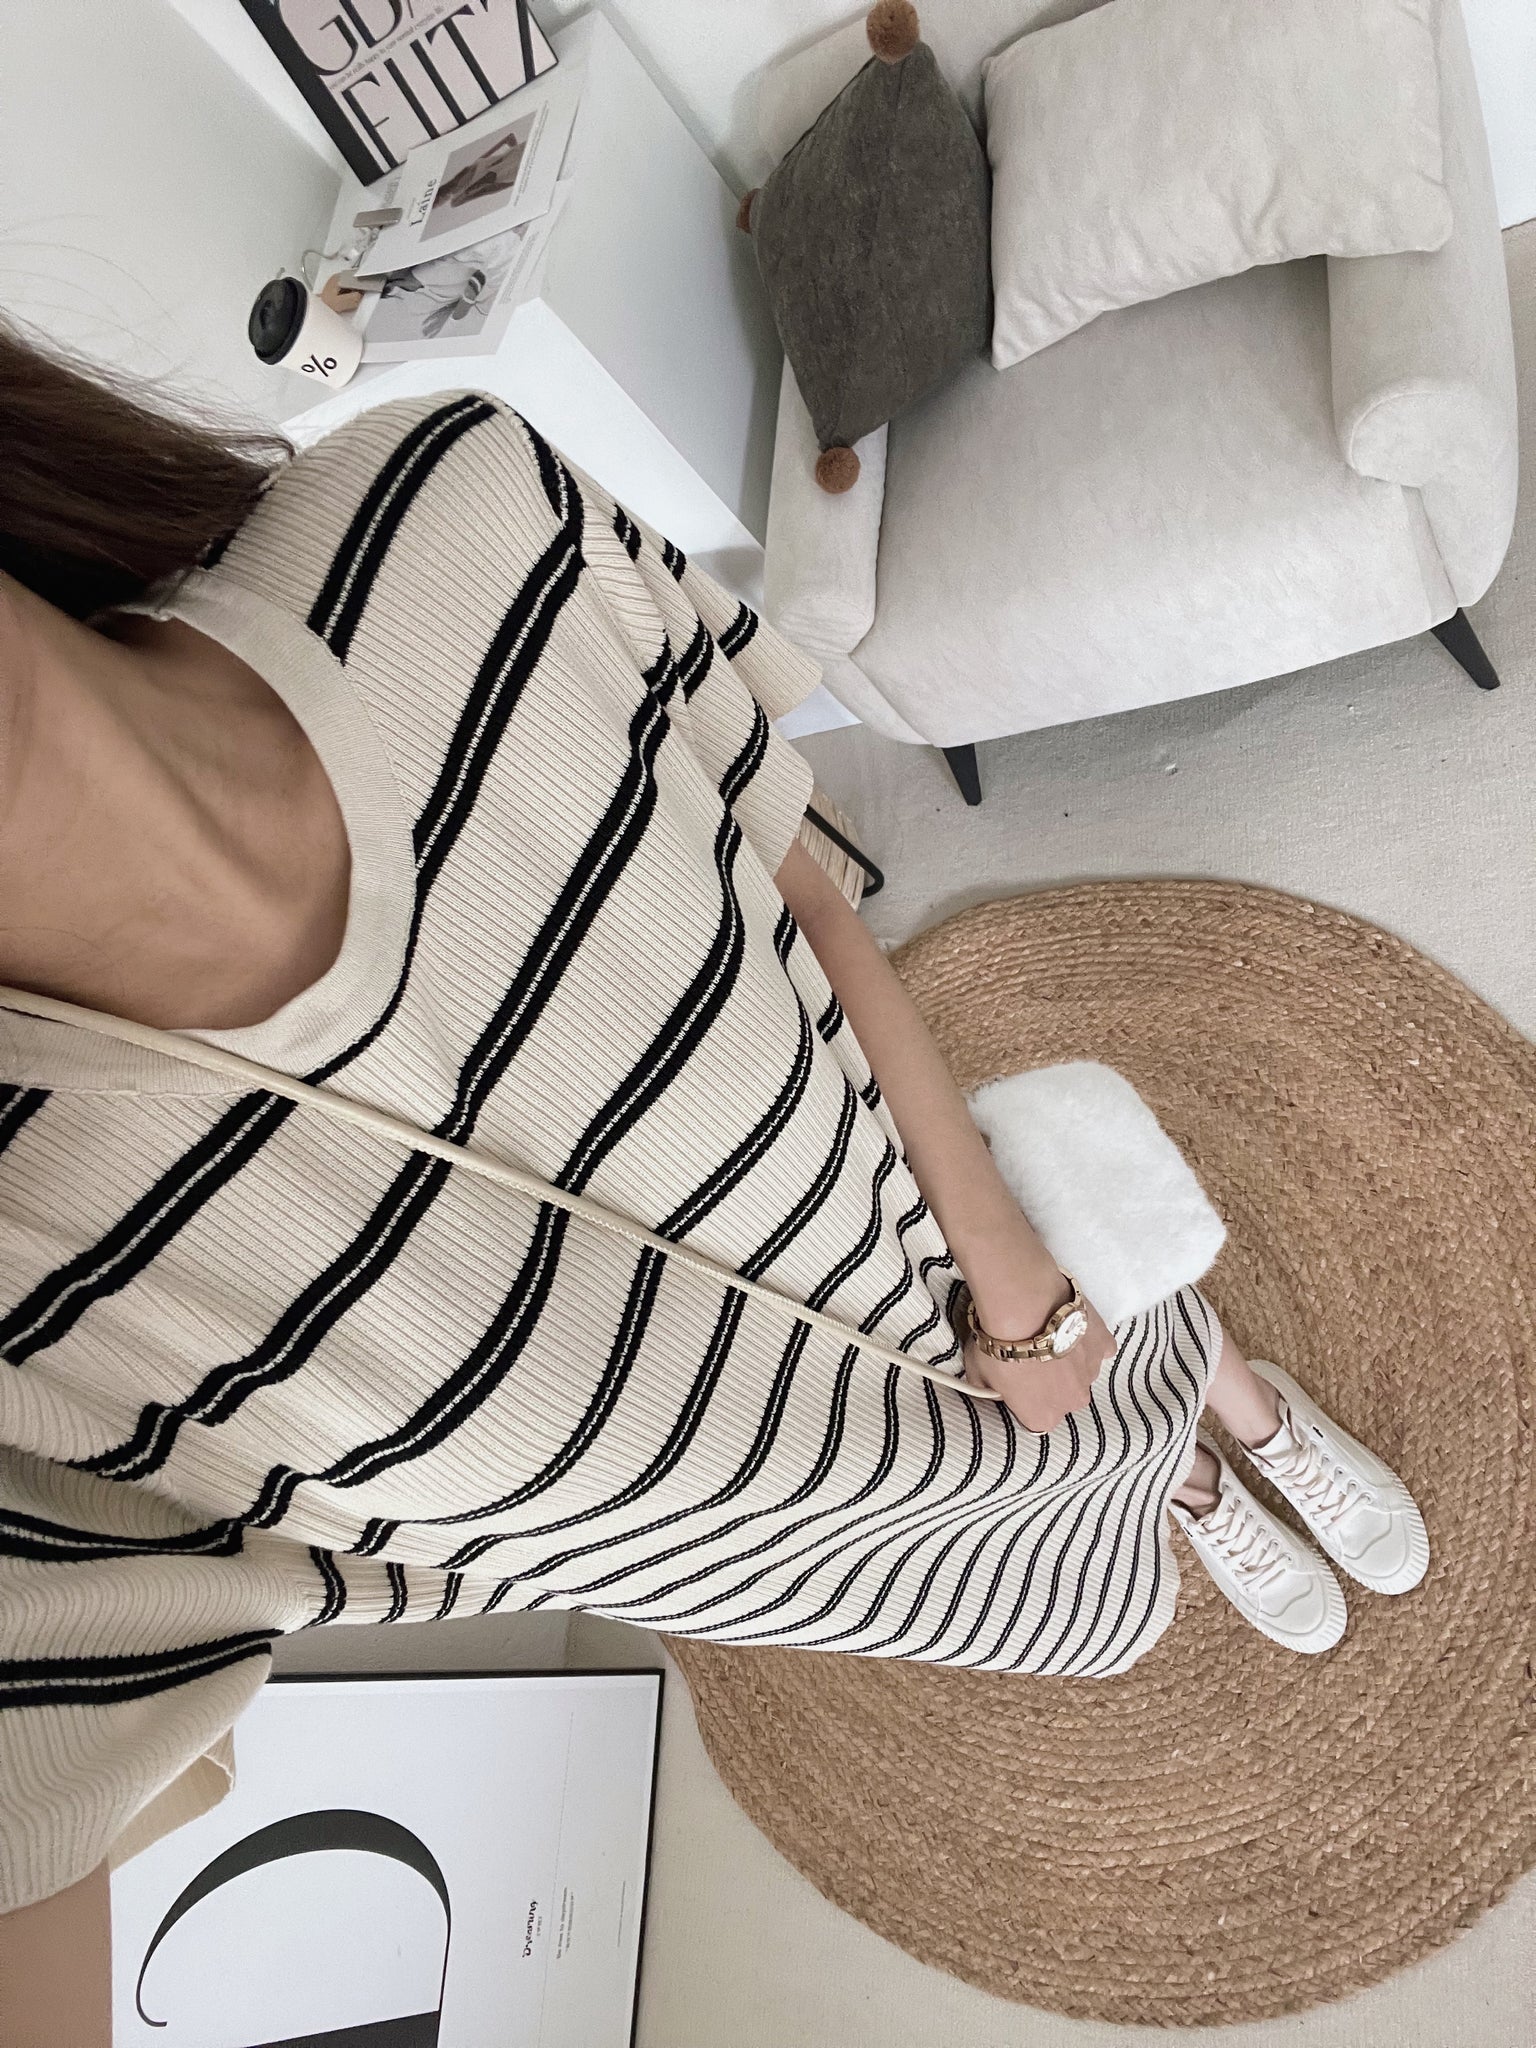 Stripes Knitted Long Dress / 简约条纹针织连衣裙